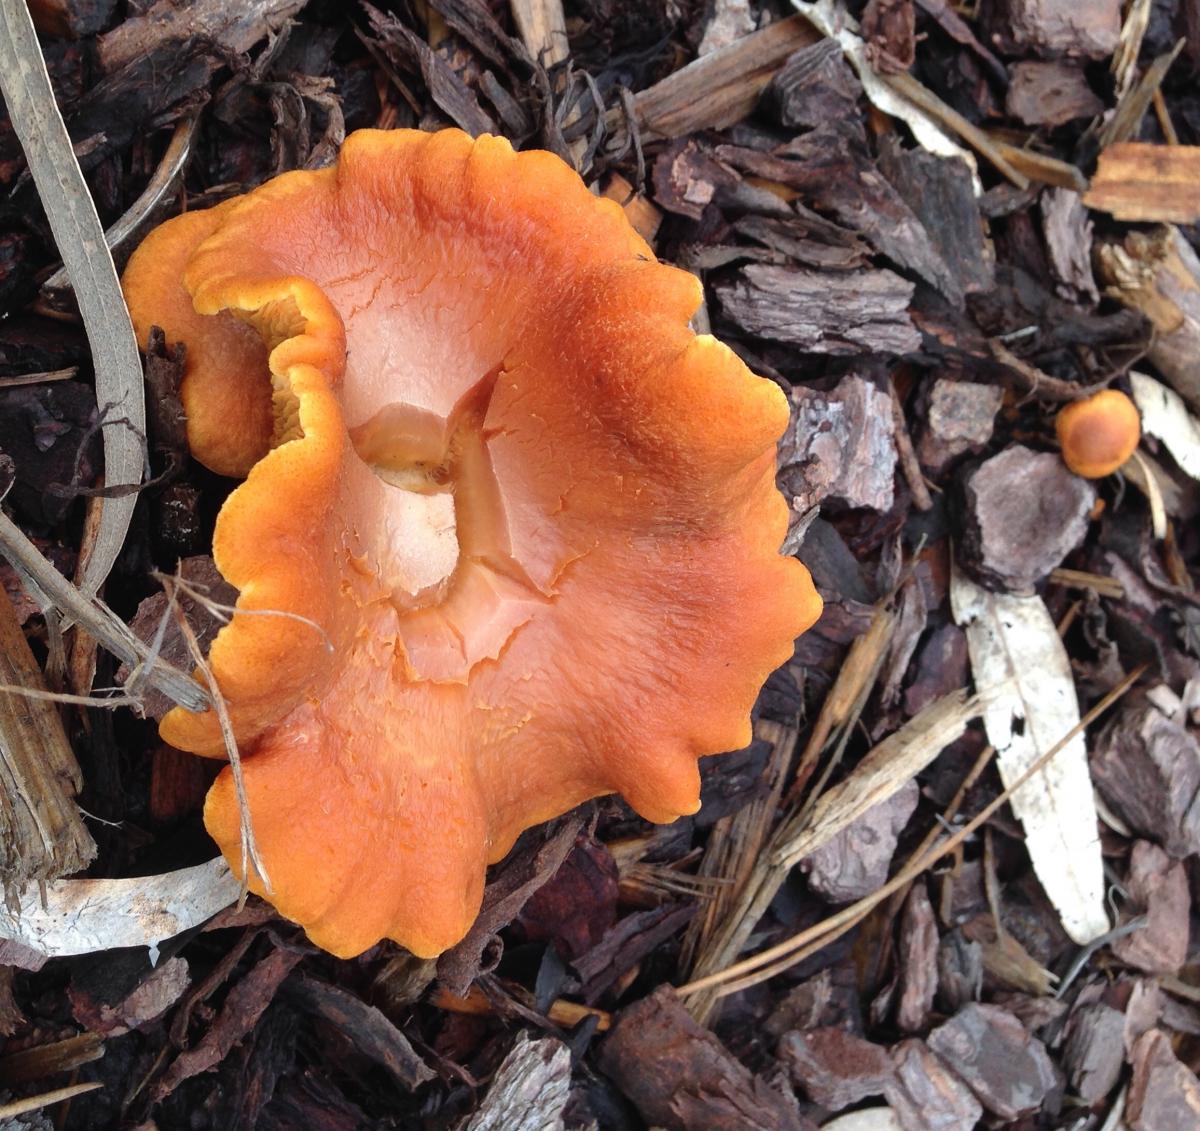 Getting the vibe- mushroom IDs needed - Fungus Identification - The ...